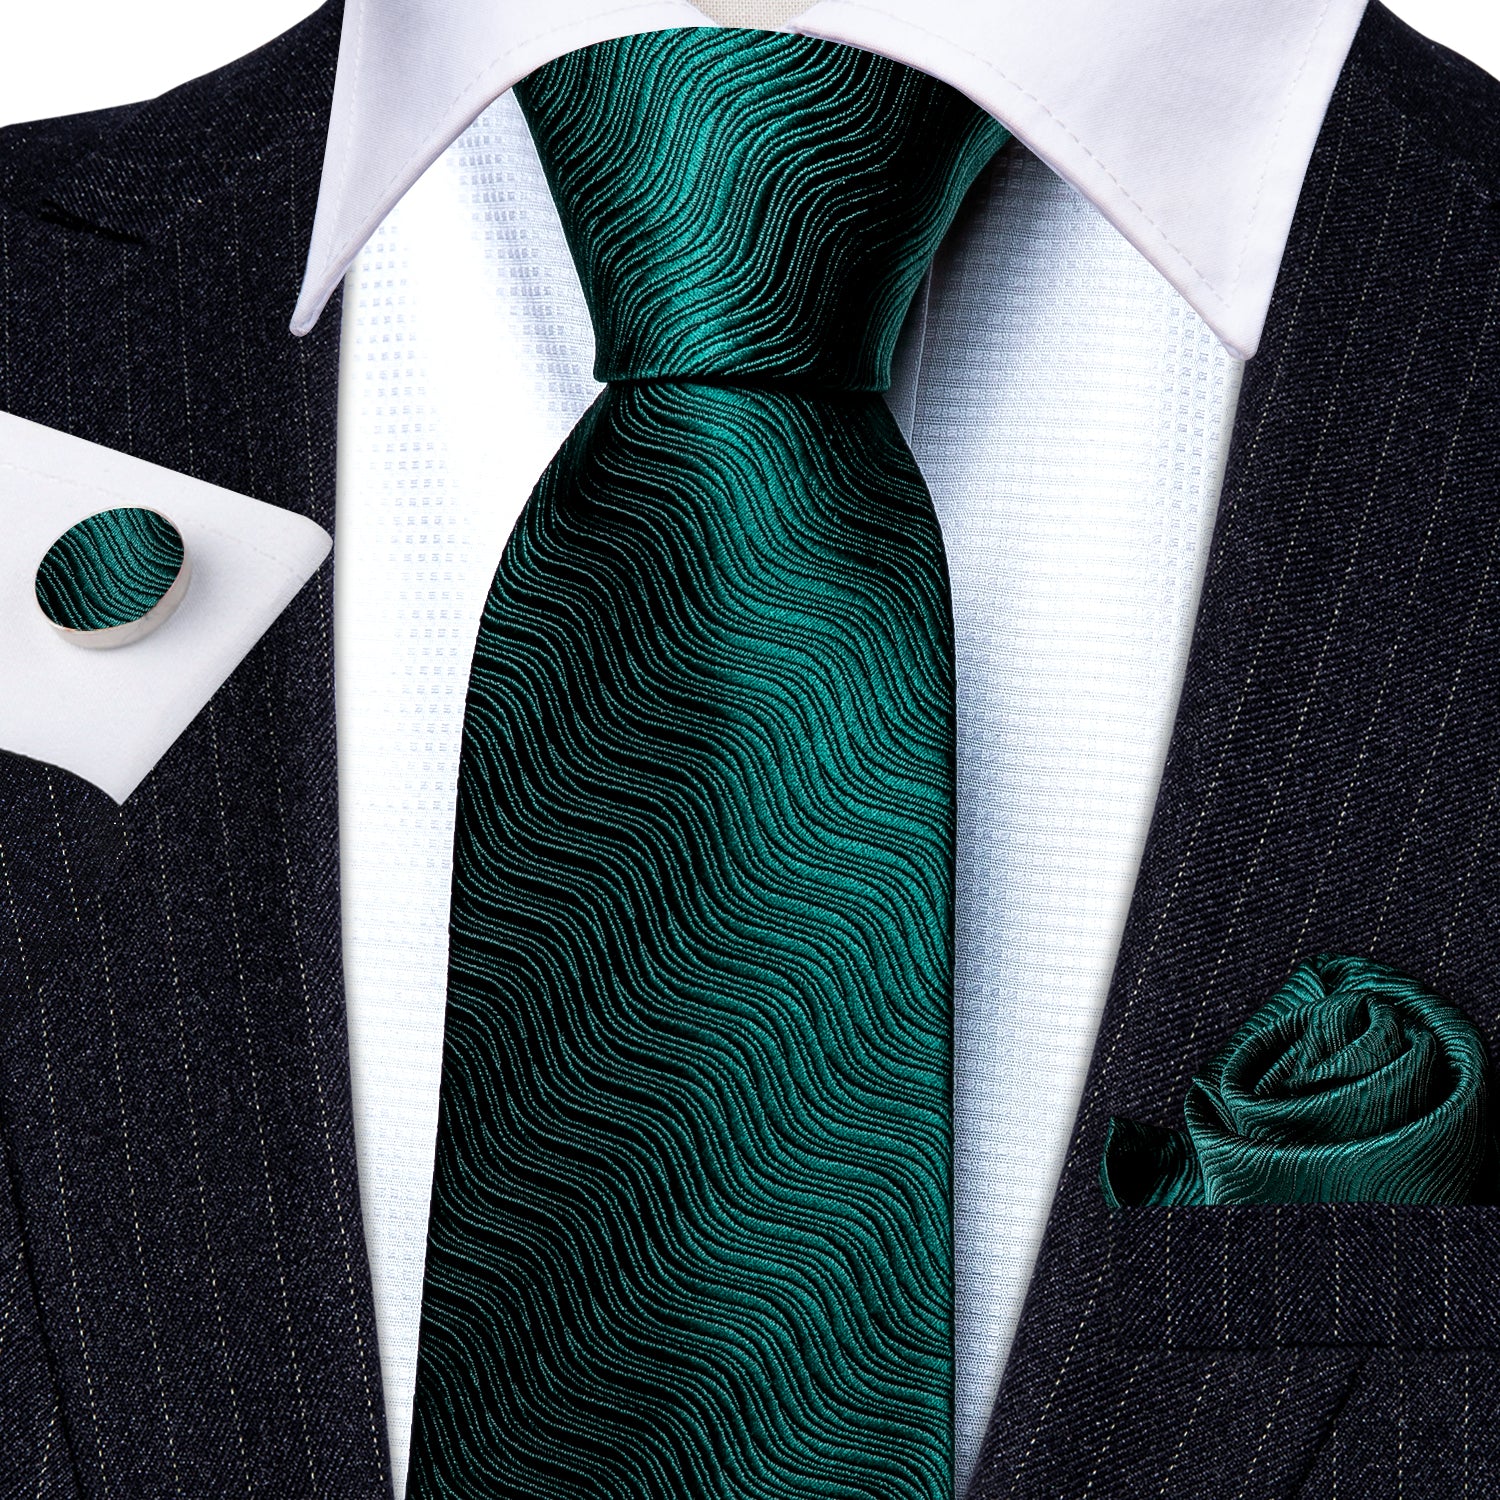 Barry.wang Green Tie Geometric Solid Silk Necktie Hanky Cufflinks Tie Clip Set